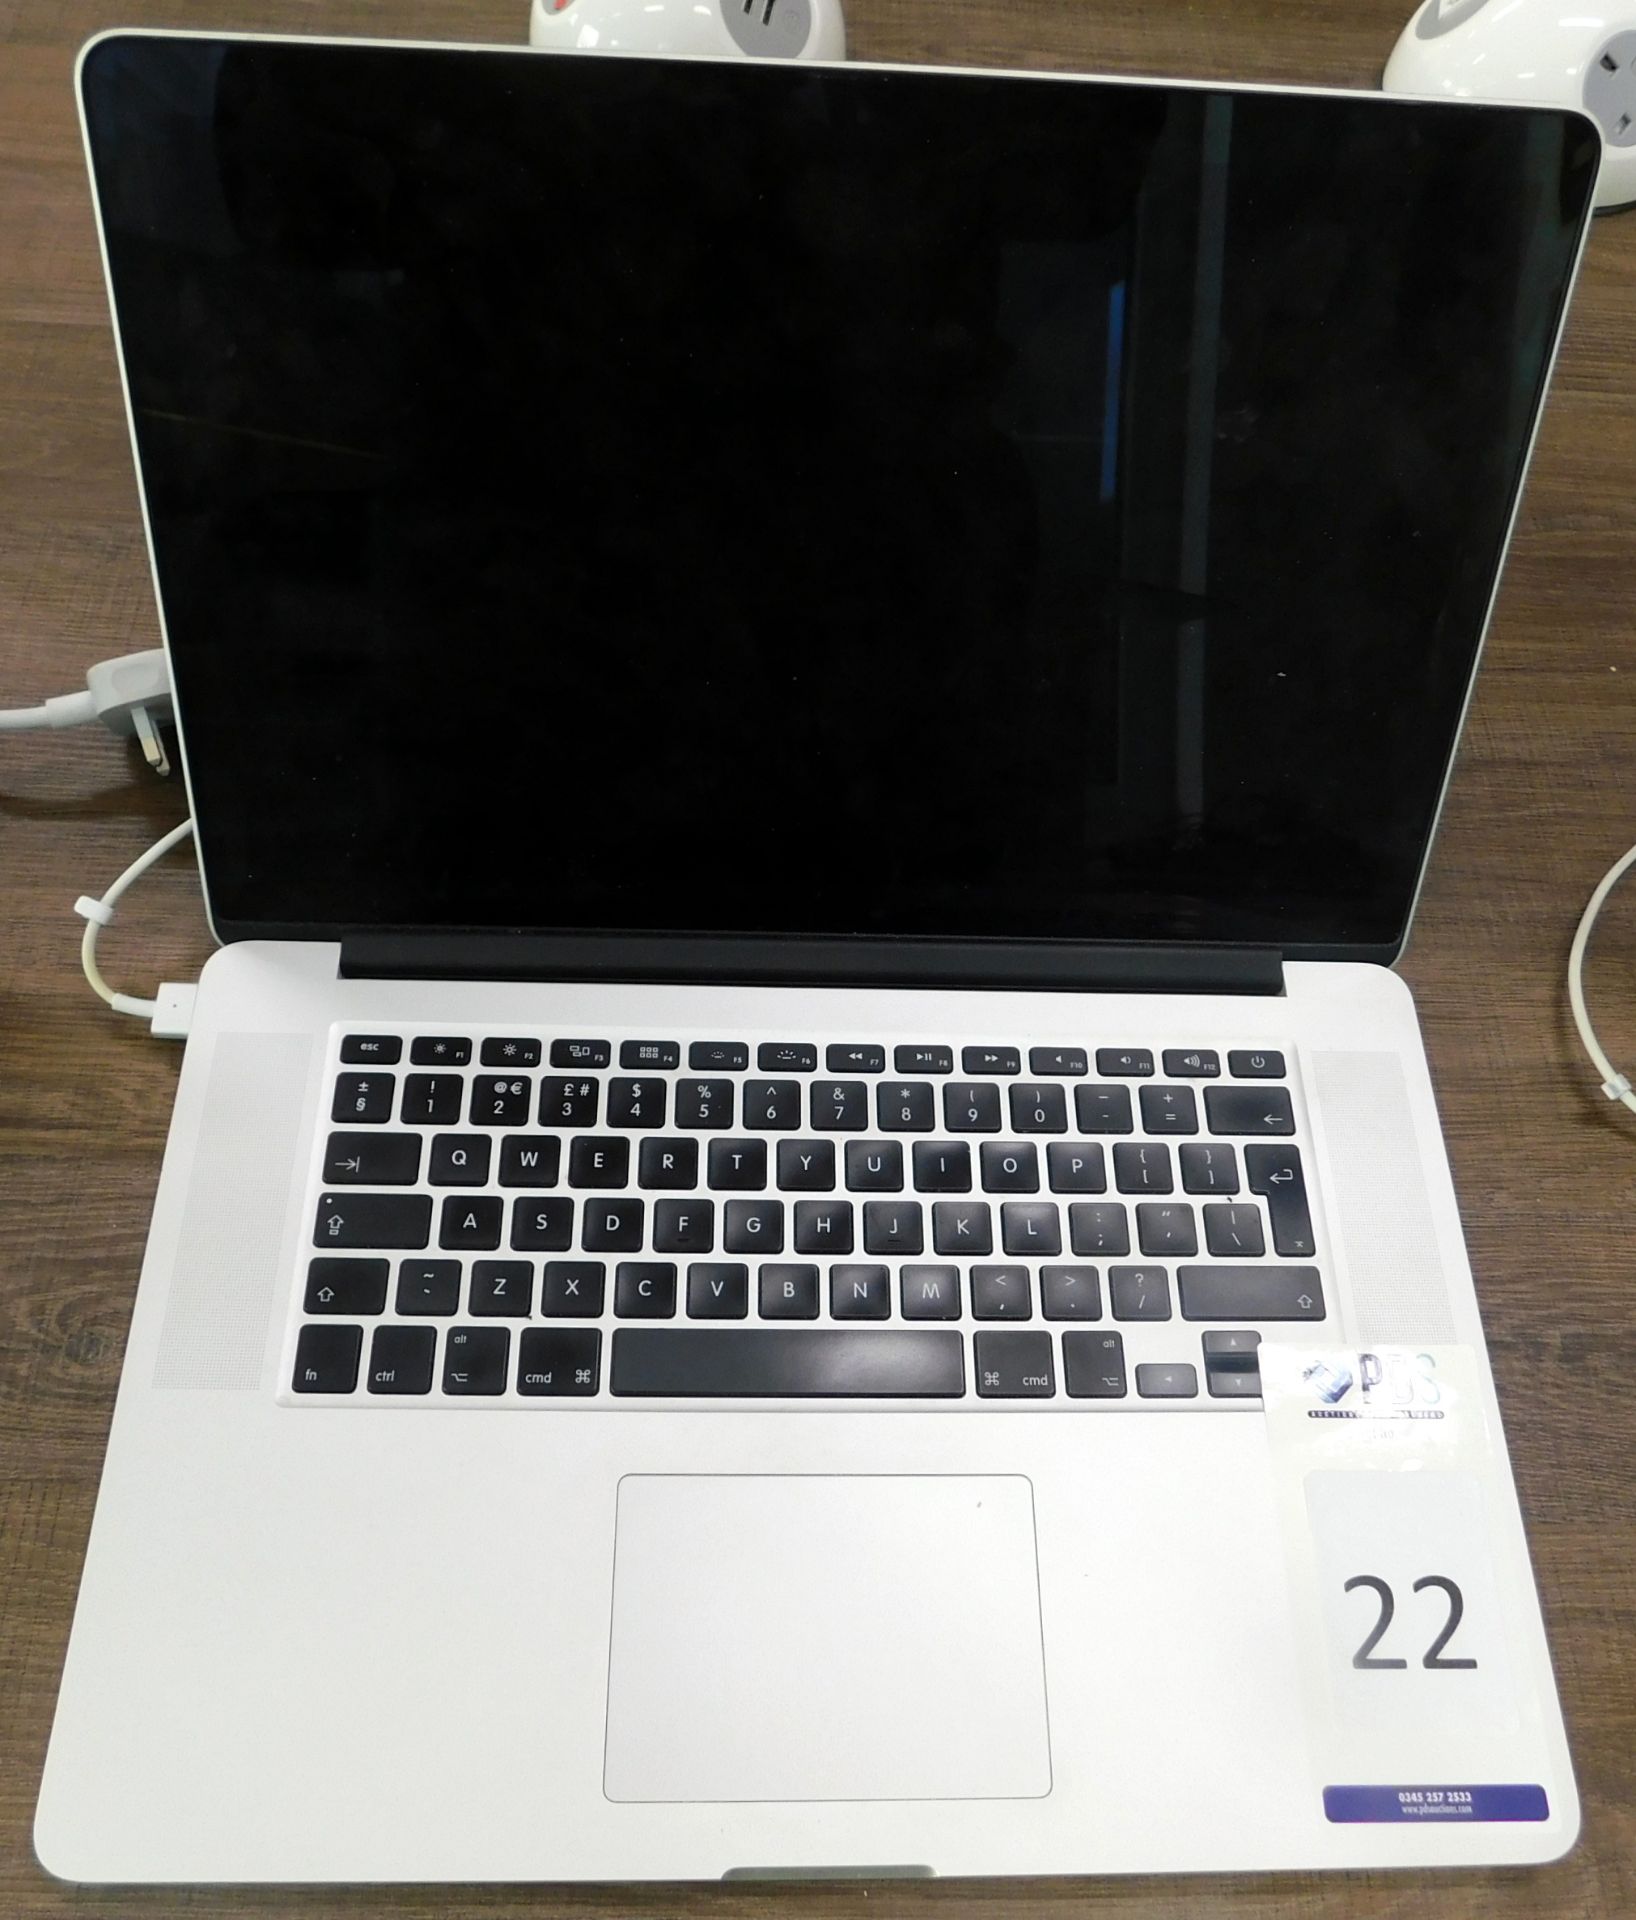 Apple MacBook Pro i7 15in, 2.2ghz Processor, 16gb RAM, 256gb SSD, A1398, s/n C02Q3AGNG8WN with